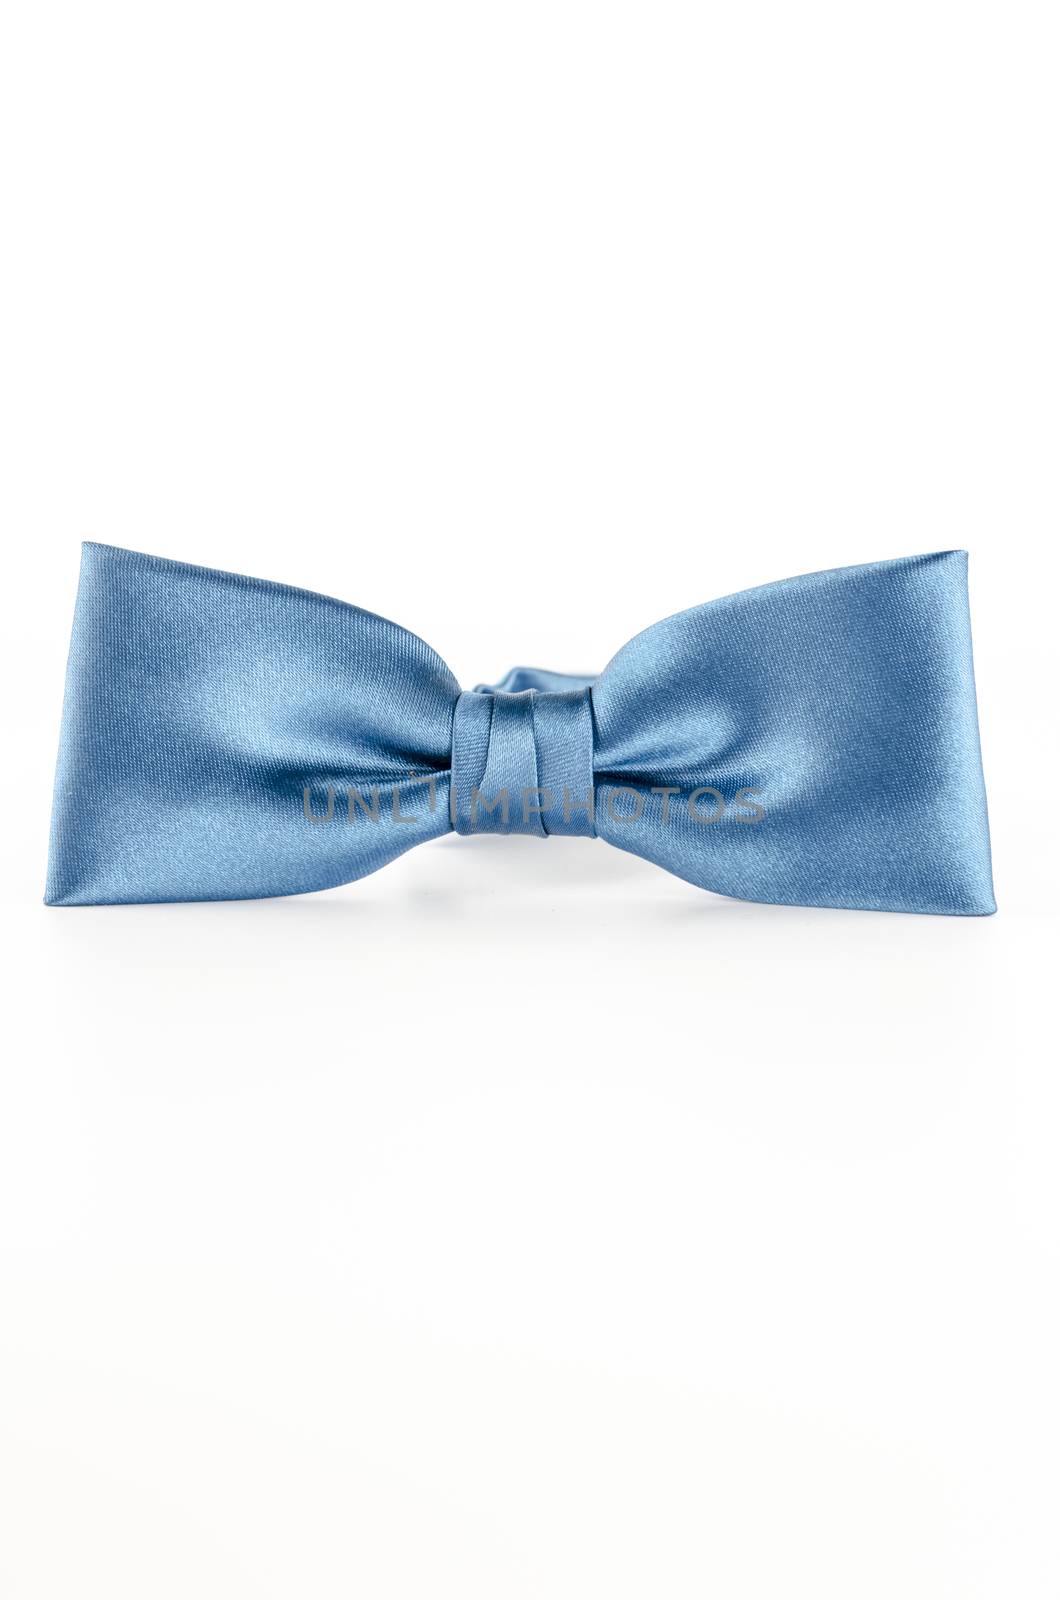 blue bow tie by ammza12